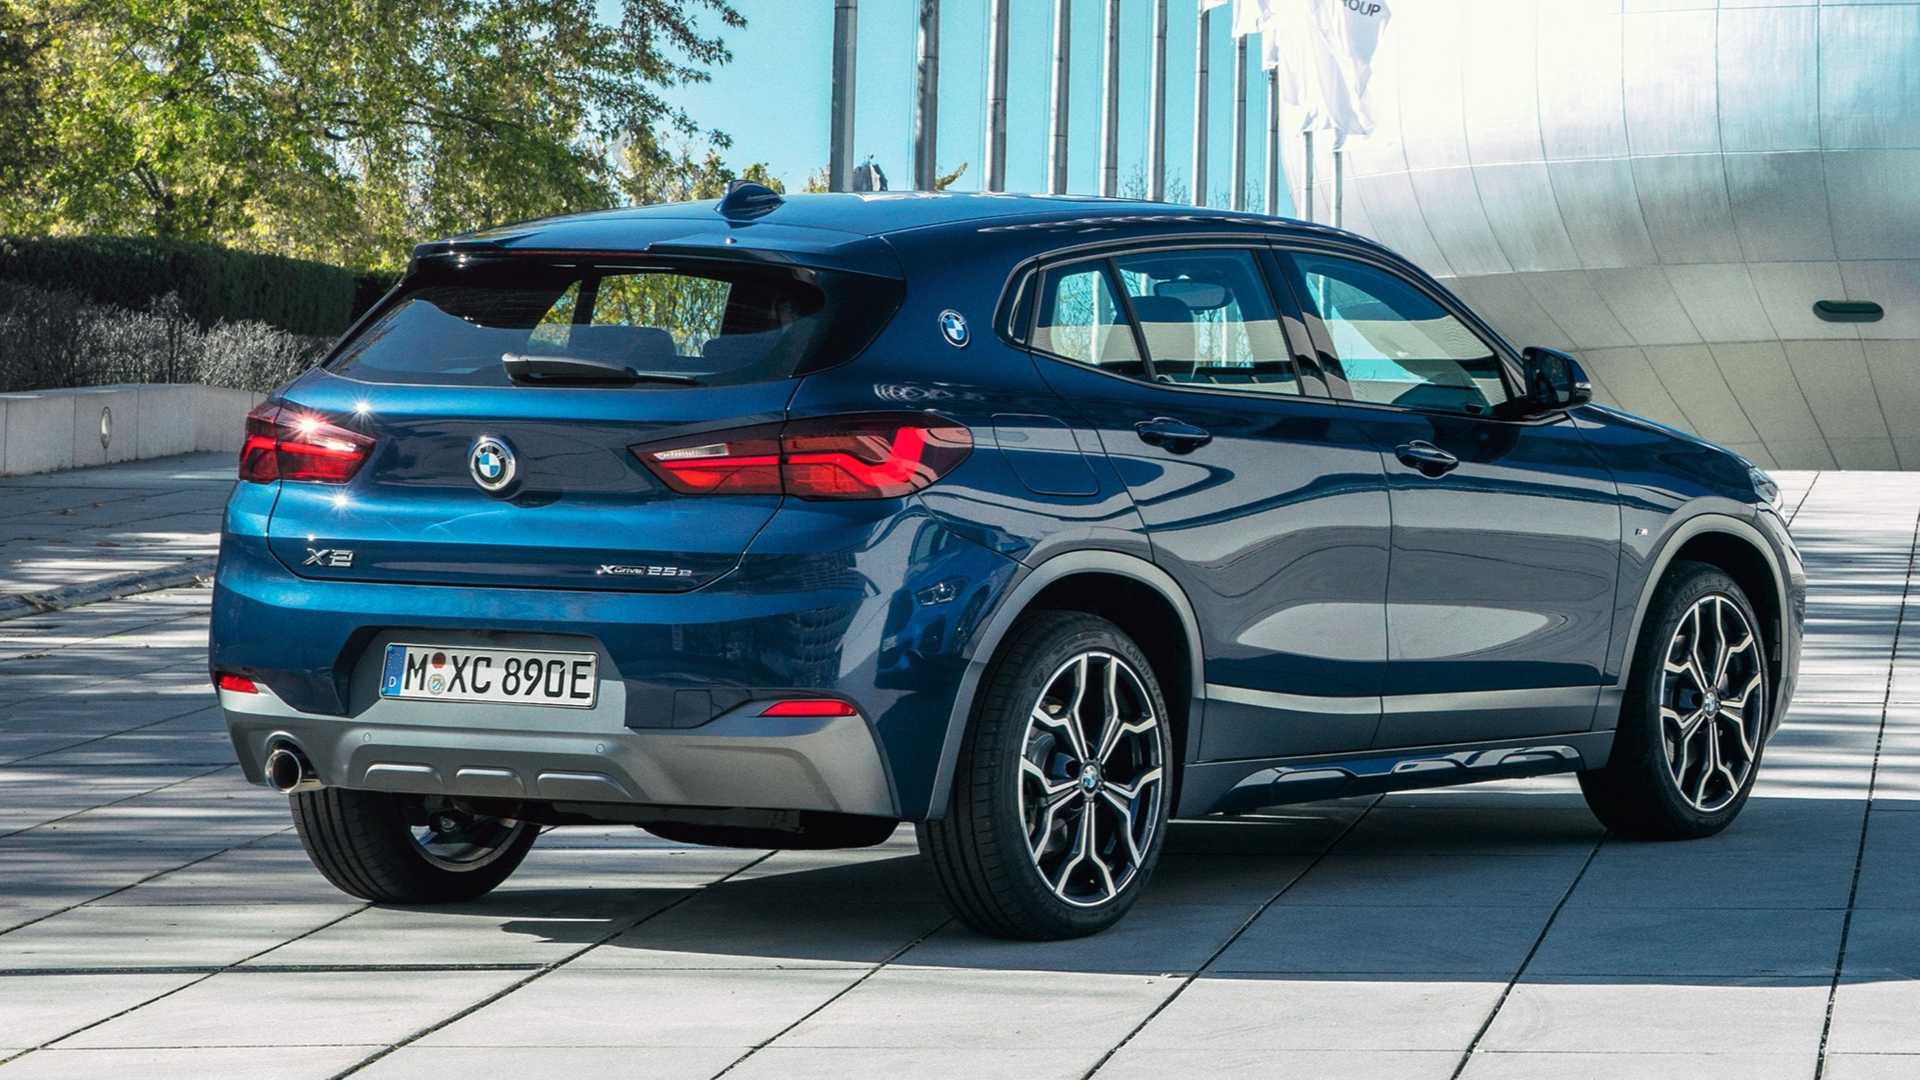 2020 BMW X2 PlugIn Hybrid Revealed, Please the X2 xDrive25e